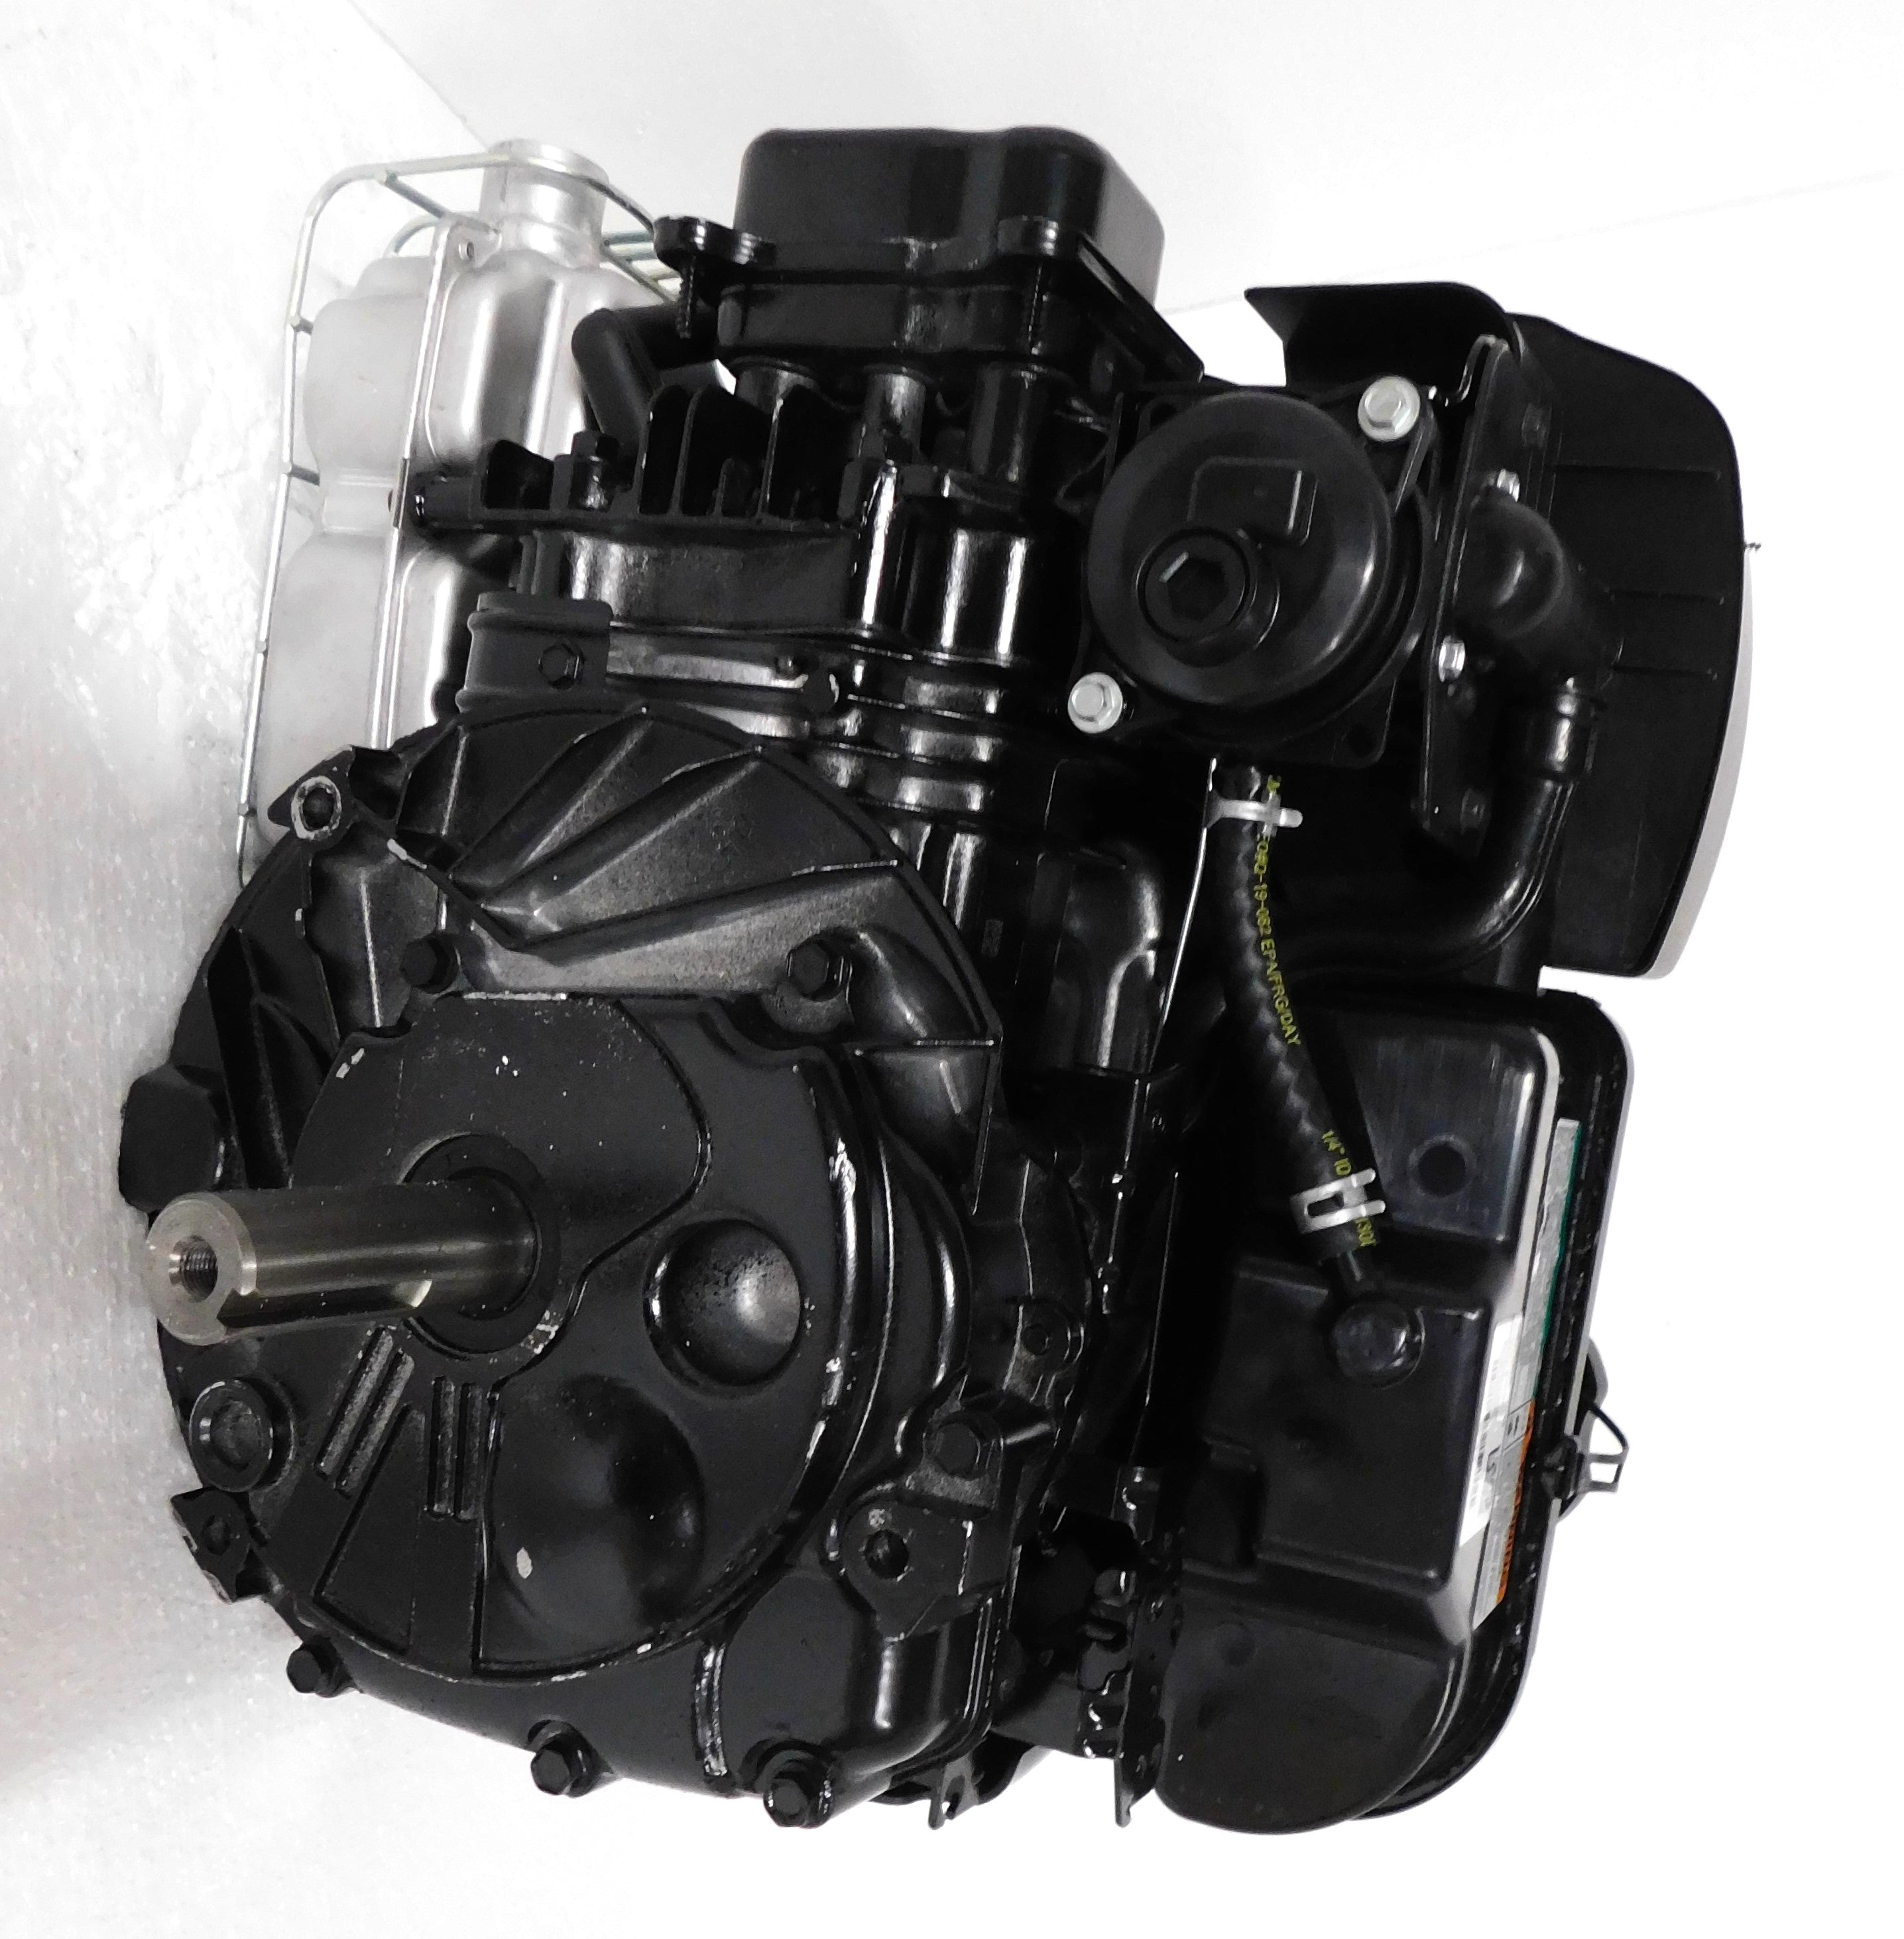 Briggs & Stratton 8.5 TP Professional Series Engine 25mm x 3-5/32" Vertical Shaft #123P02-0059